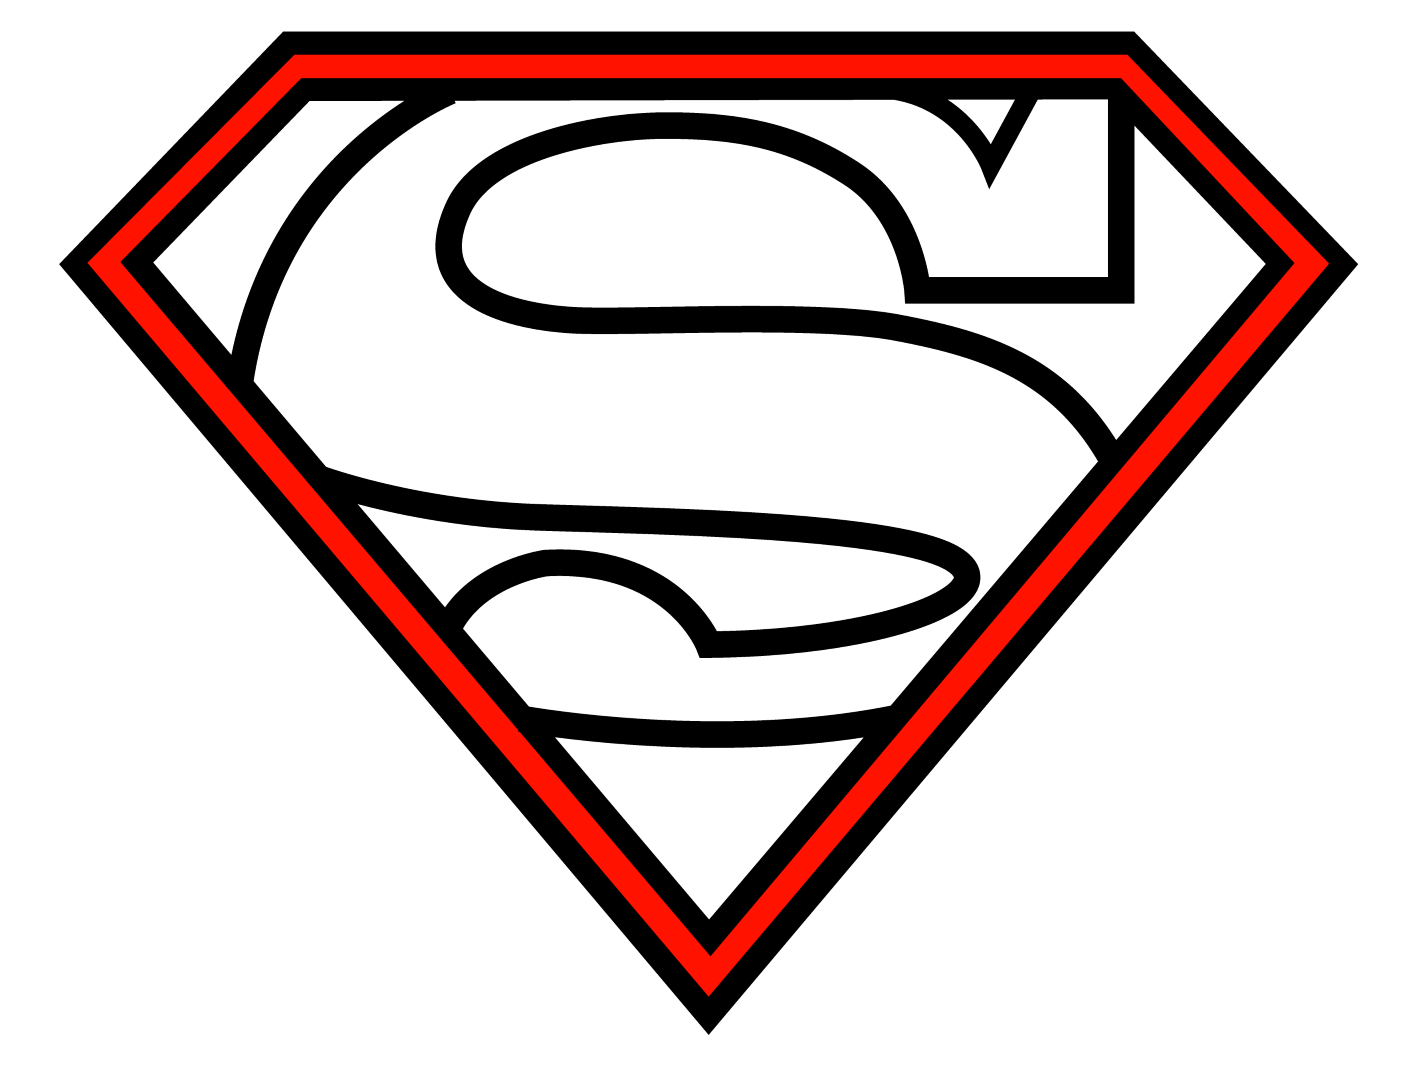 Superman logo clip art free clipart images 2